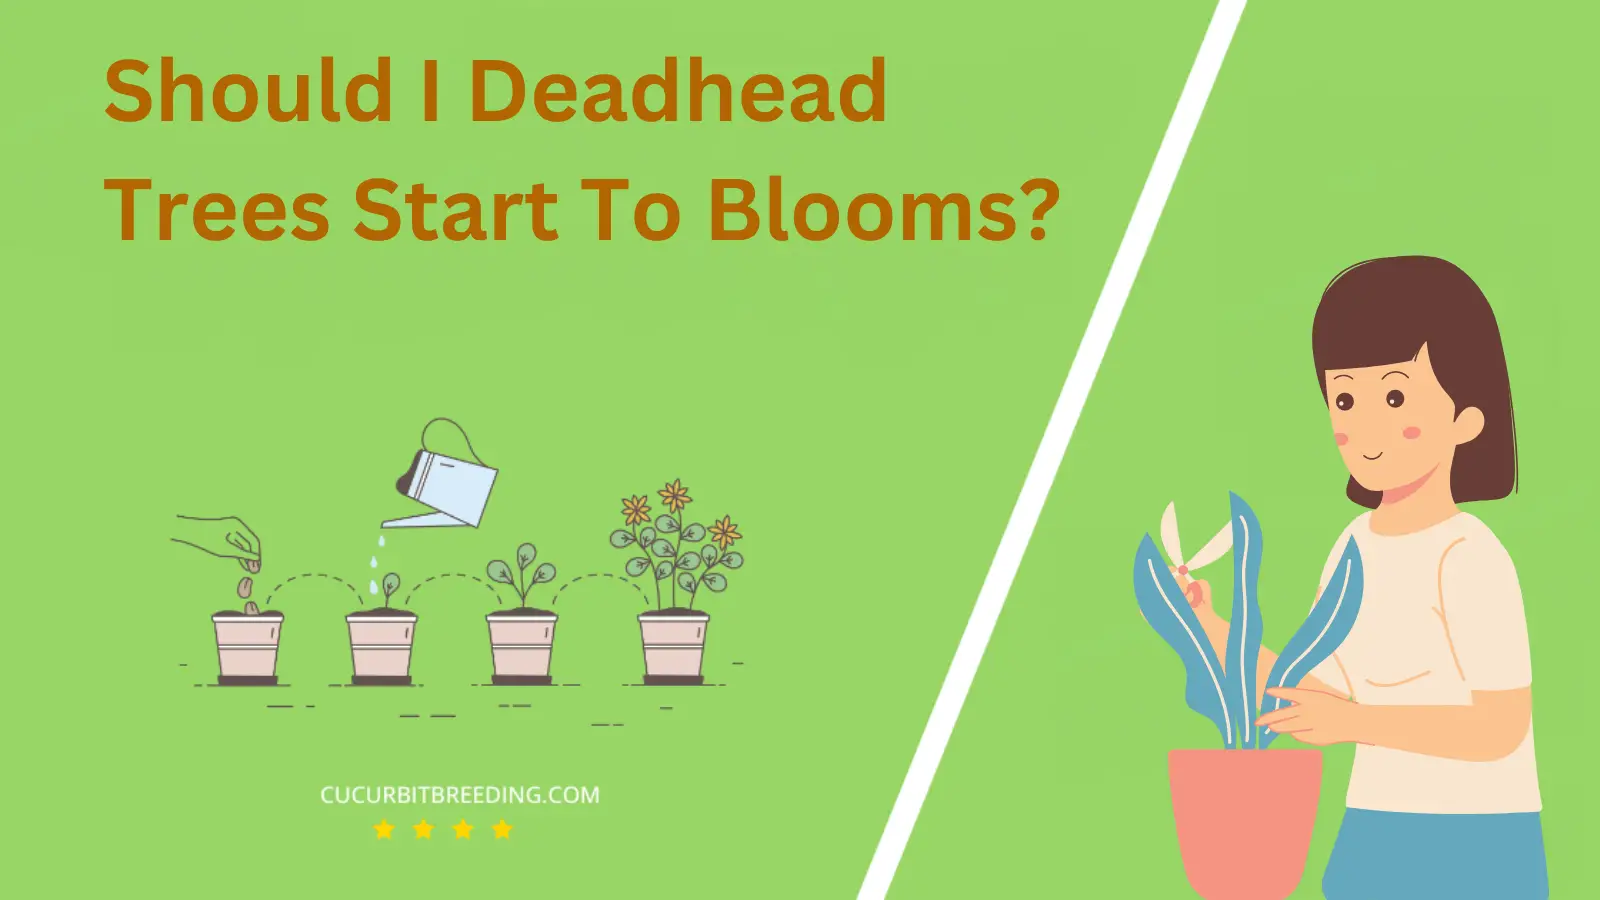 Should I Deadhead Trees Start To Blooms?